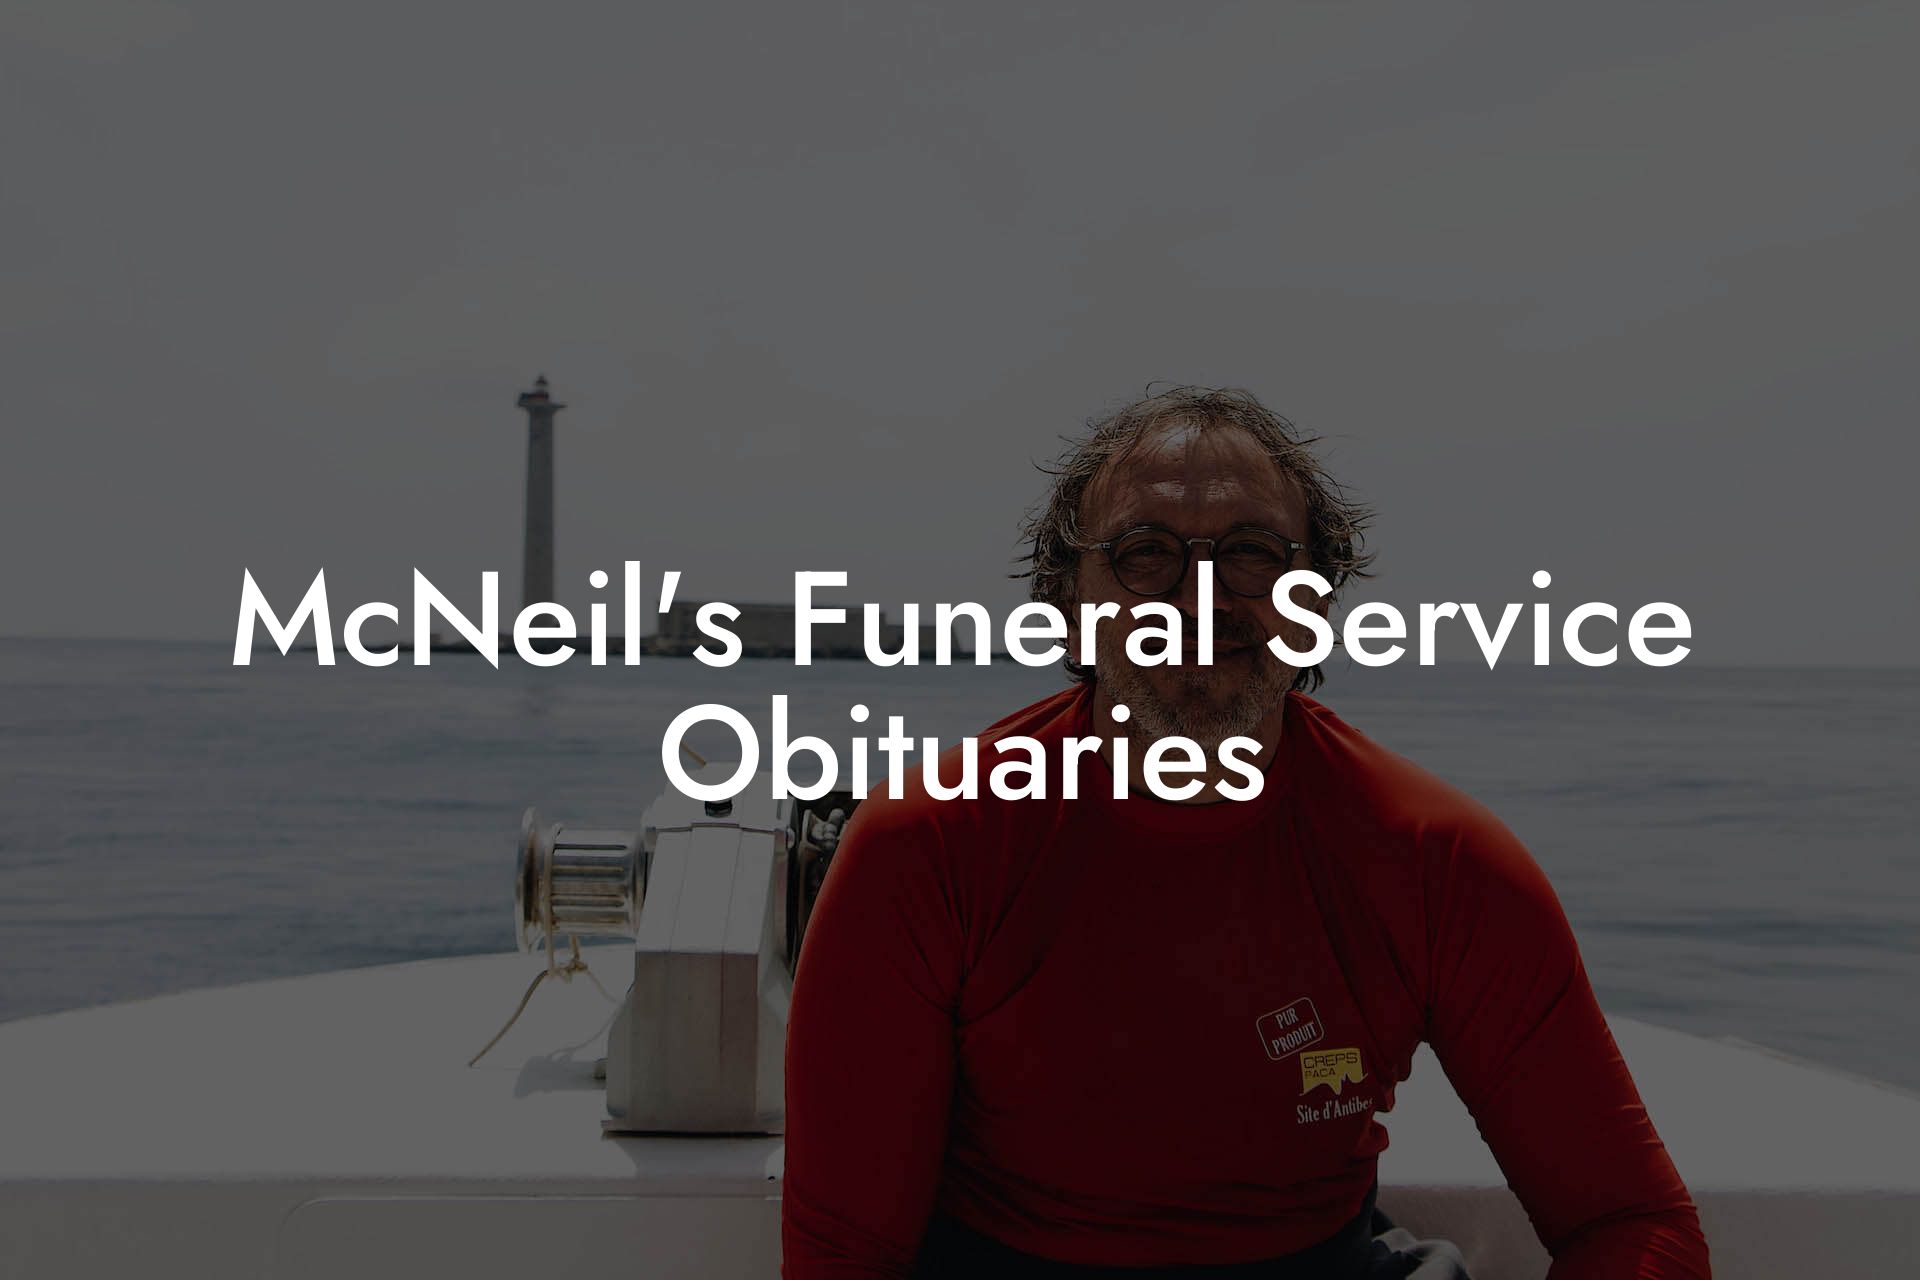 McNeil's Funeral Service Obituaries